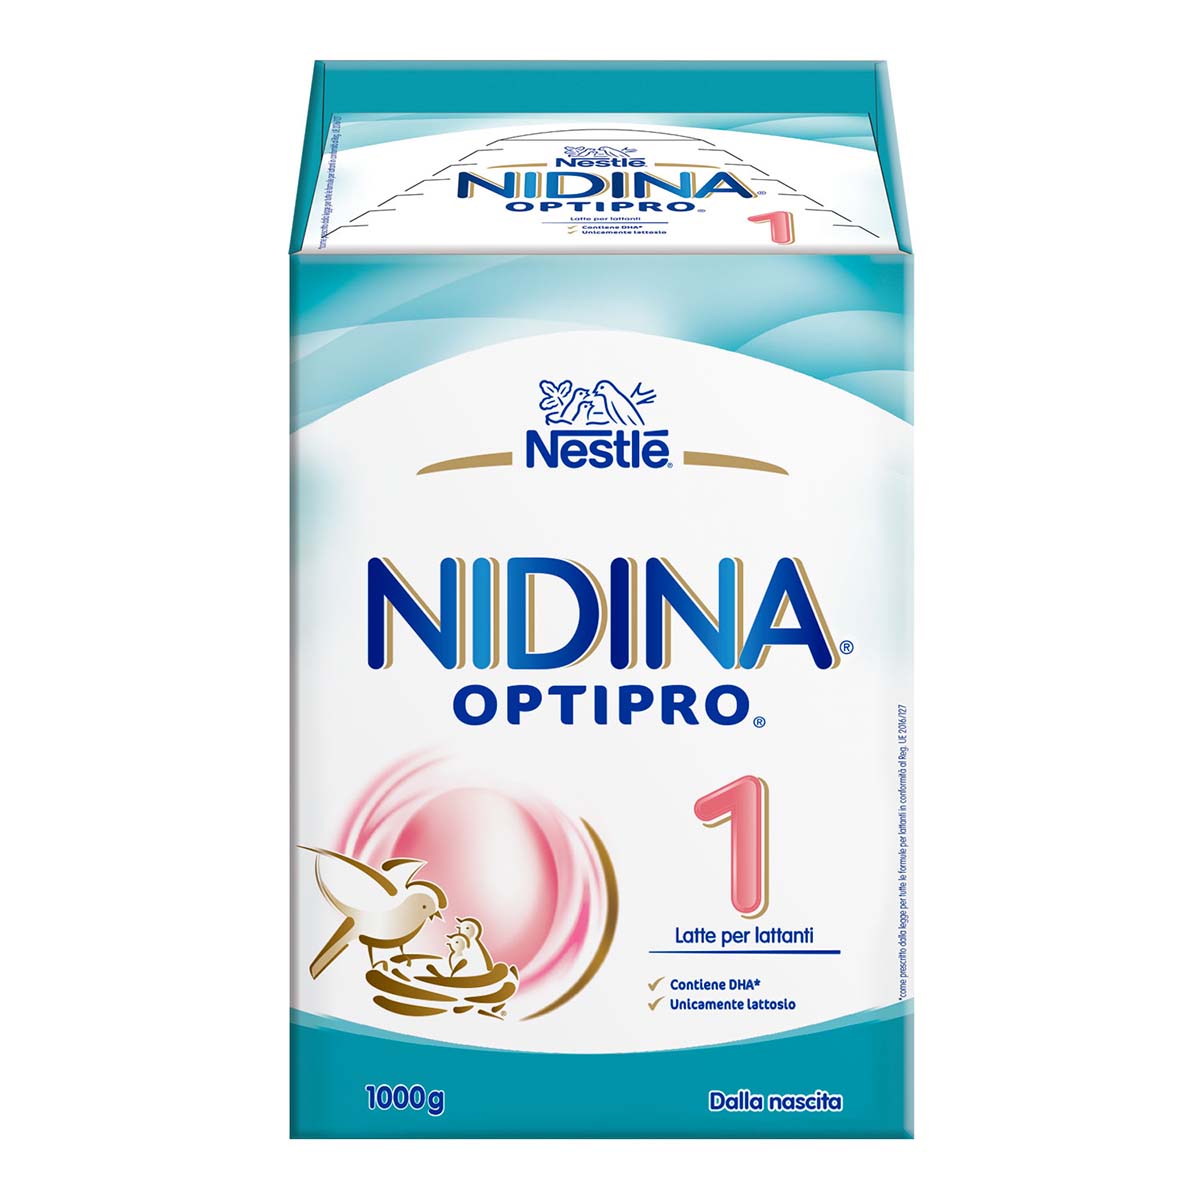 Nestlé NIDINA OPTIPRO 1 1kg (2x500g), Latte per lattanti in polvere, dalla nascita al 6° mese